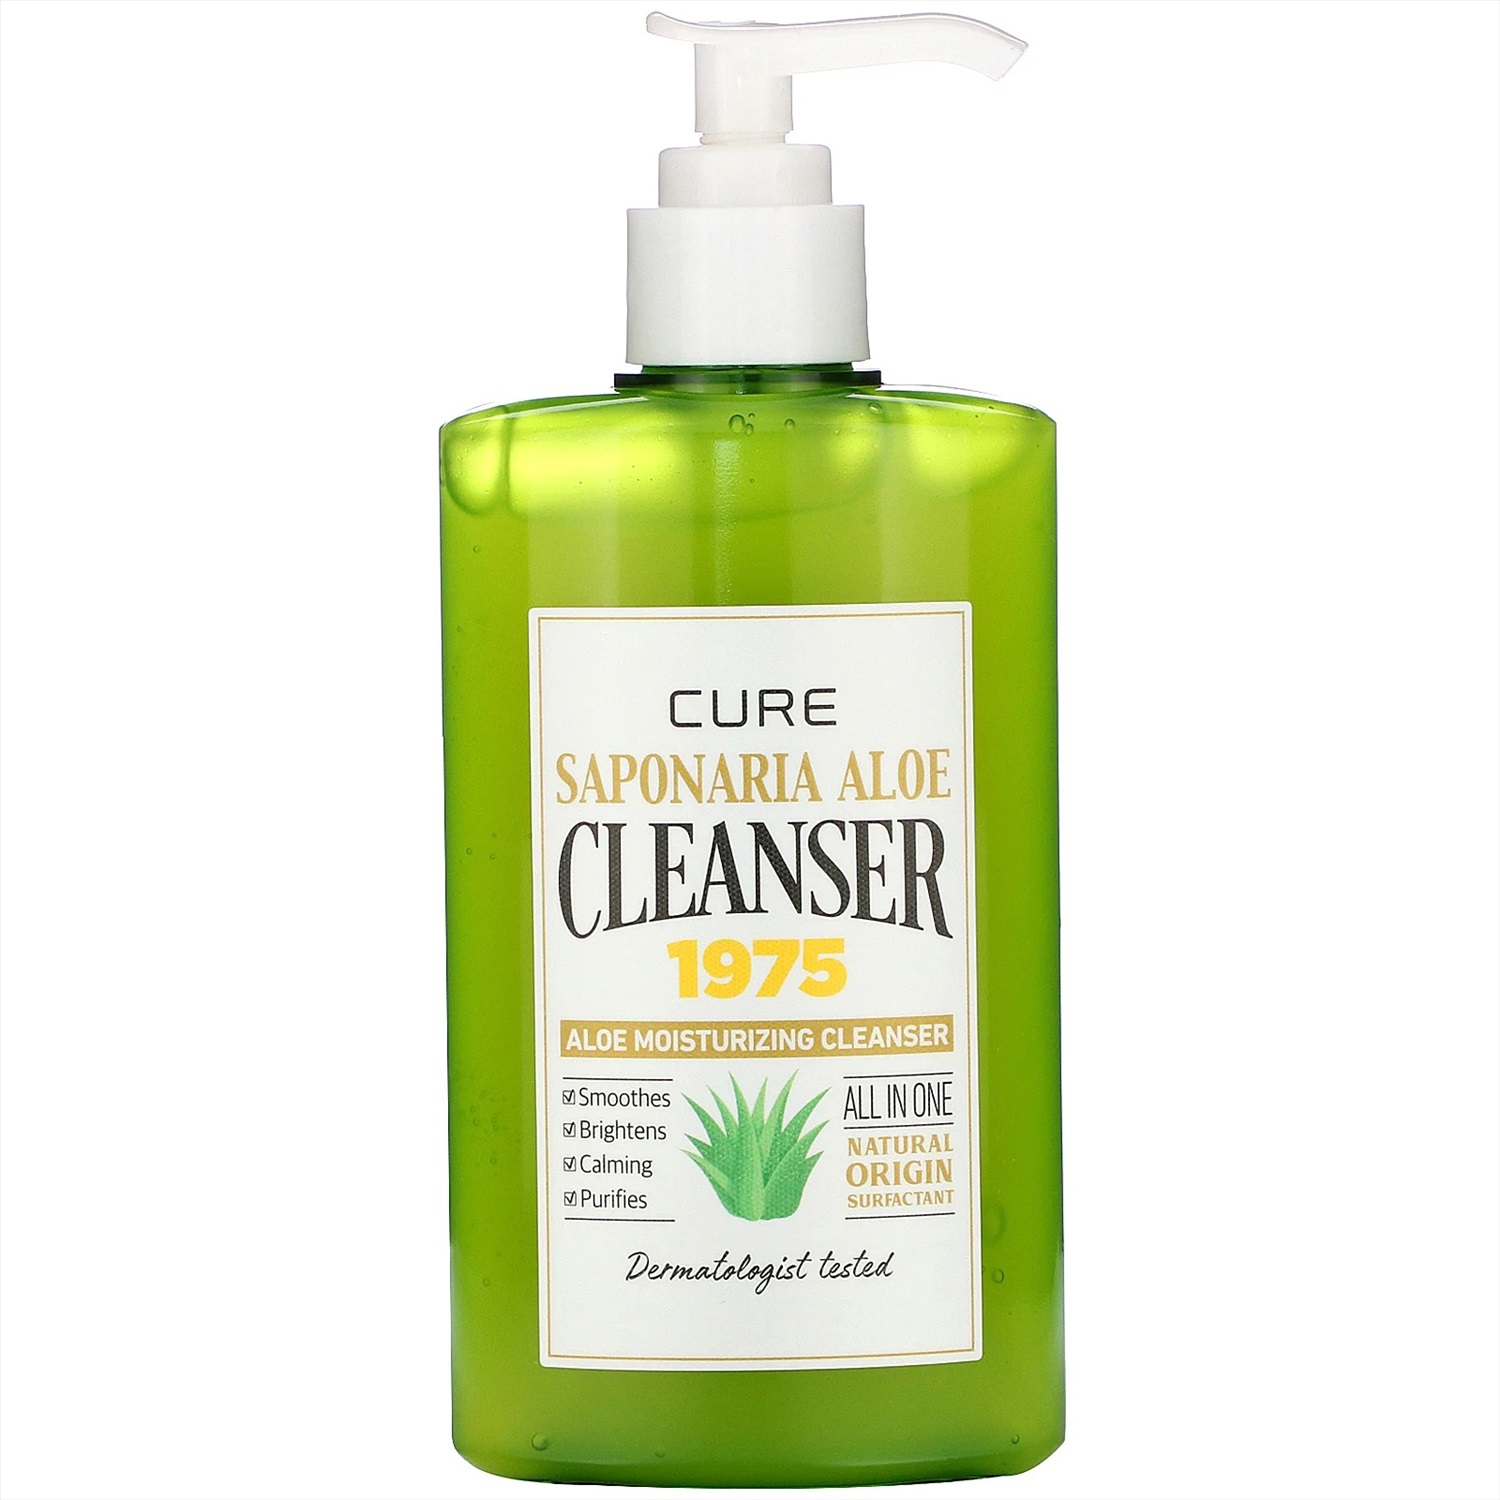 Aloe cleanser